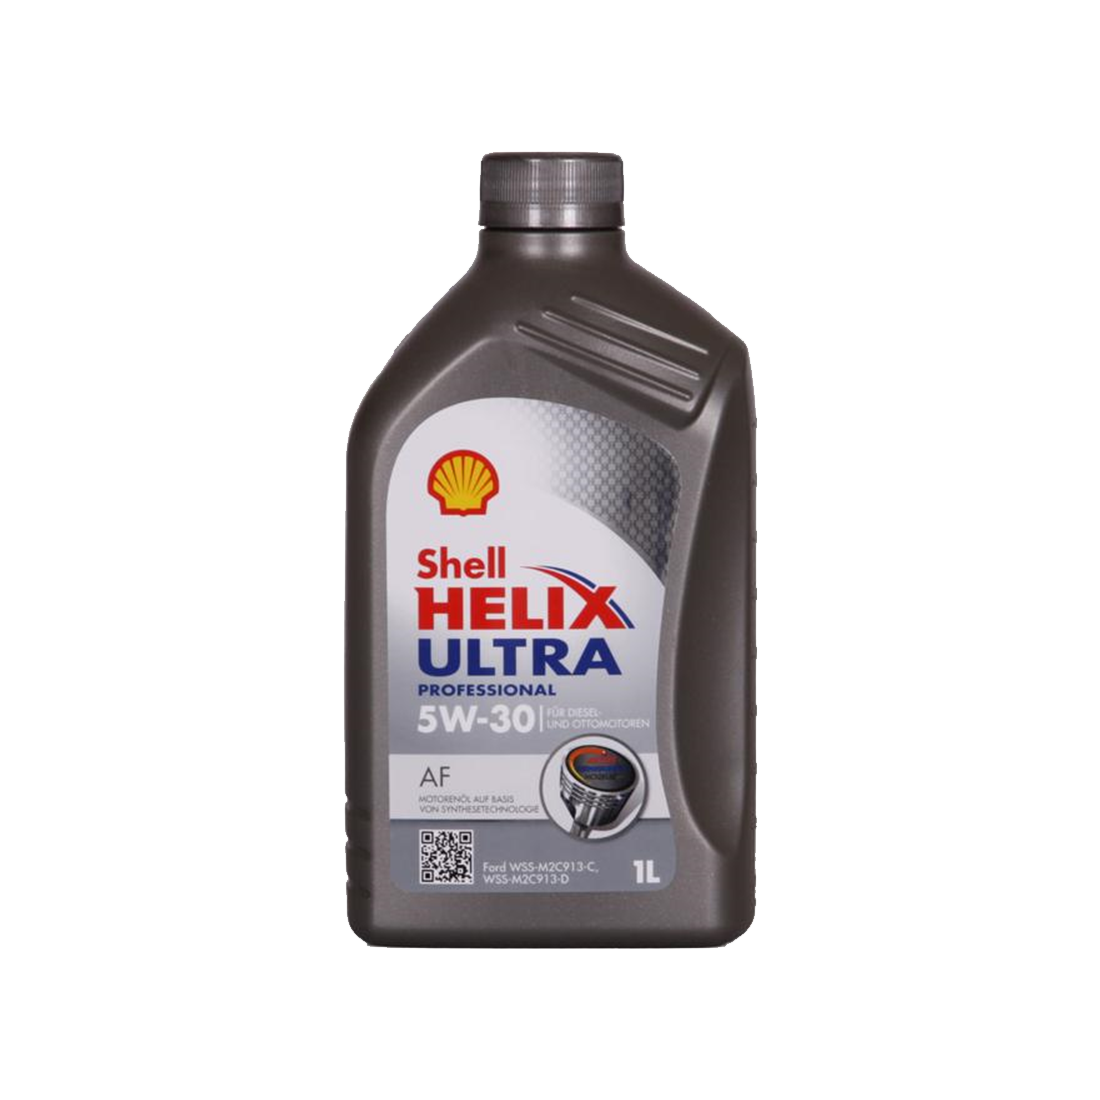 Syntetiskolja Shell Helix Ultra Professional AF 5W-30, 1L